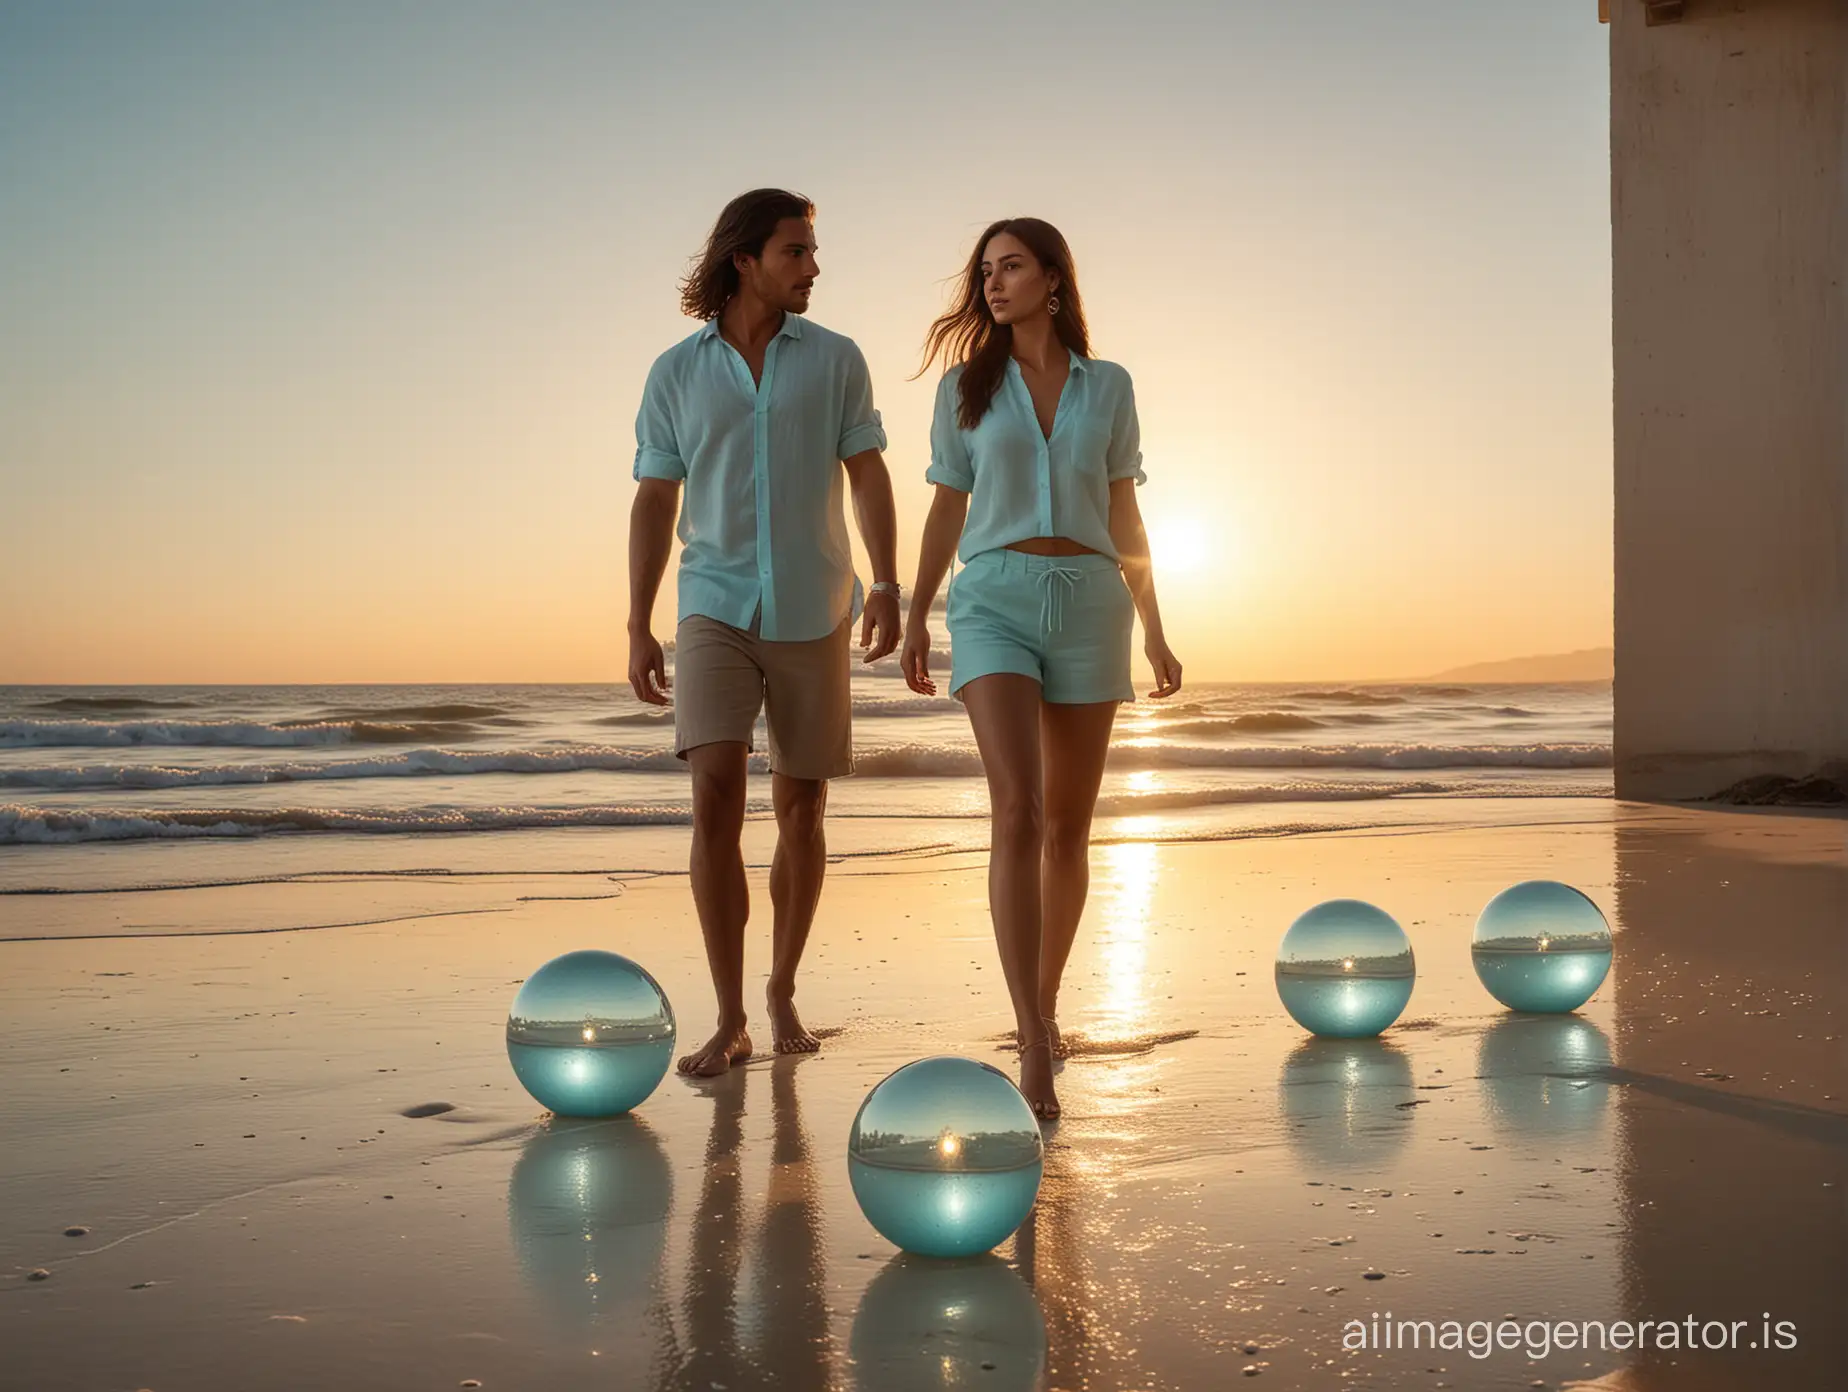 Elegant-Latin-Models-in-Turquoise-Beachwear-Amidst-Glass-Spheres-at-Sunset